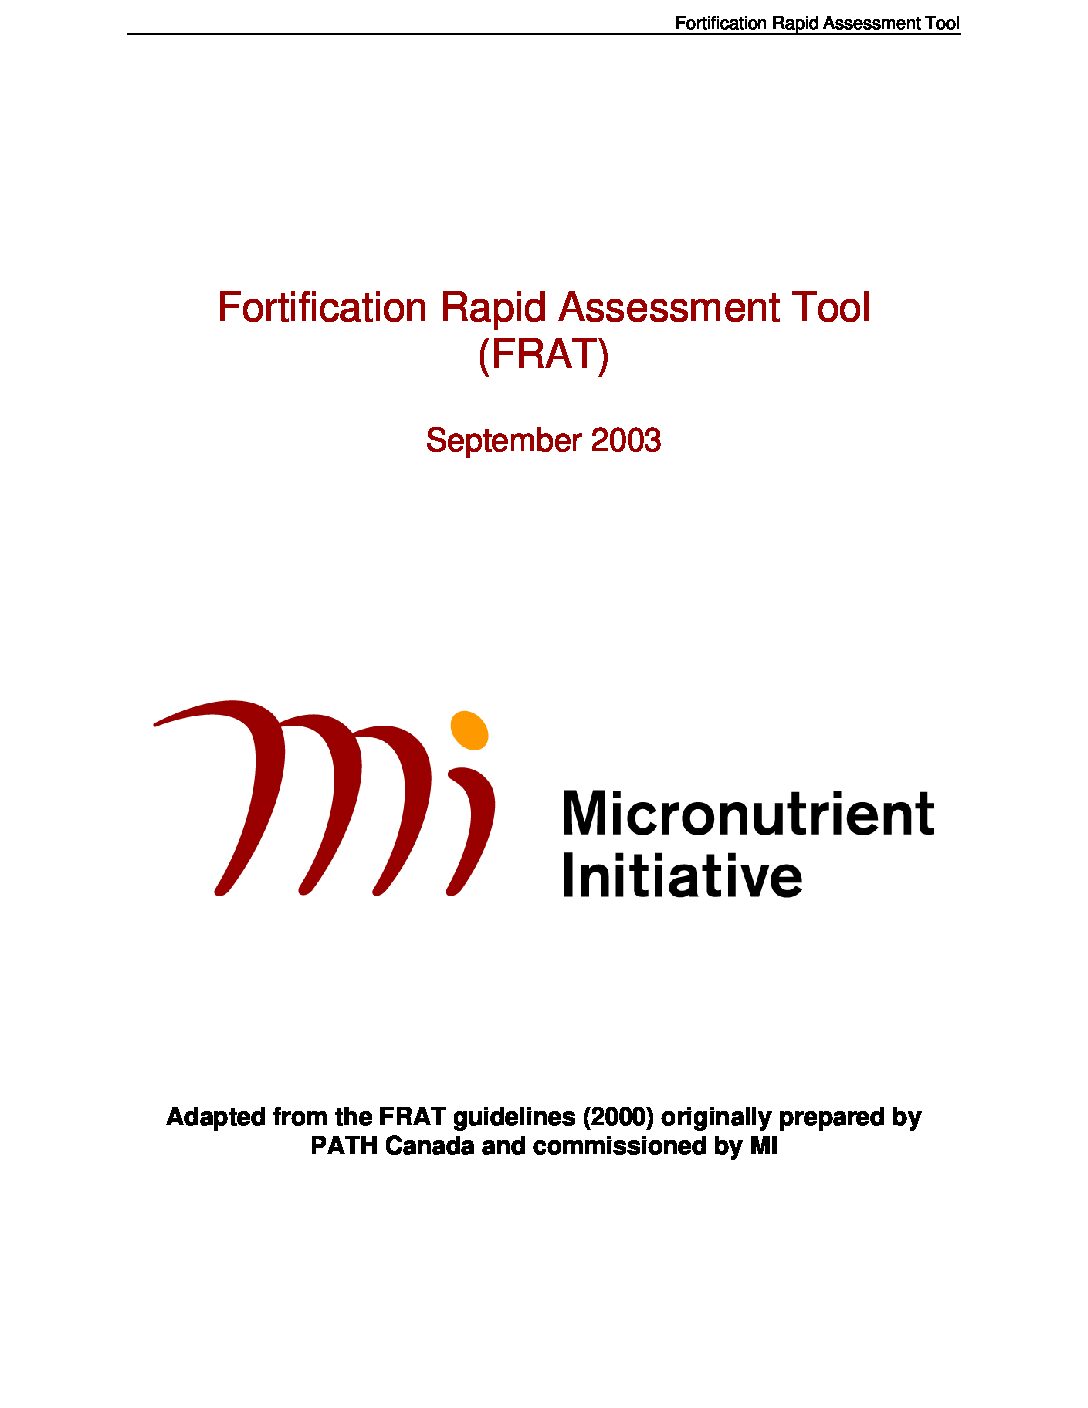 Fortification Rapid Assessment Tool (FRAT) thumbnail